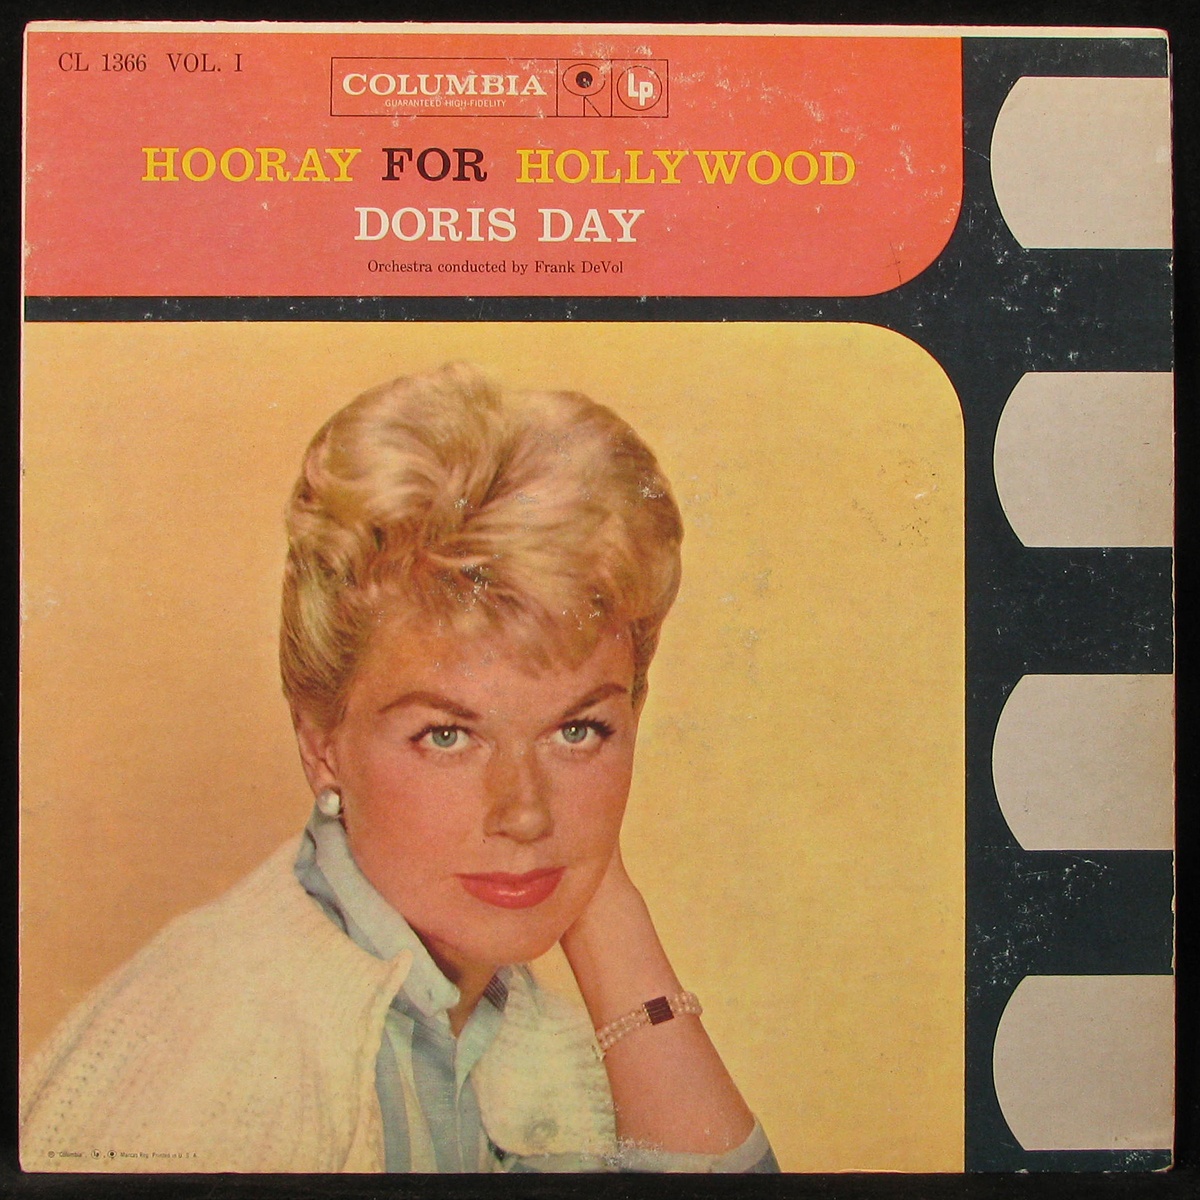 Doris Day - Christmas with Doris Day Vol. 2 (2019) обложки альбомов.